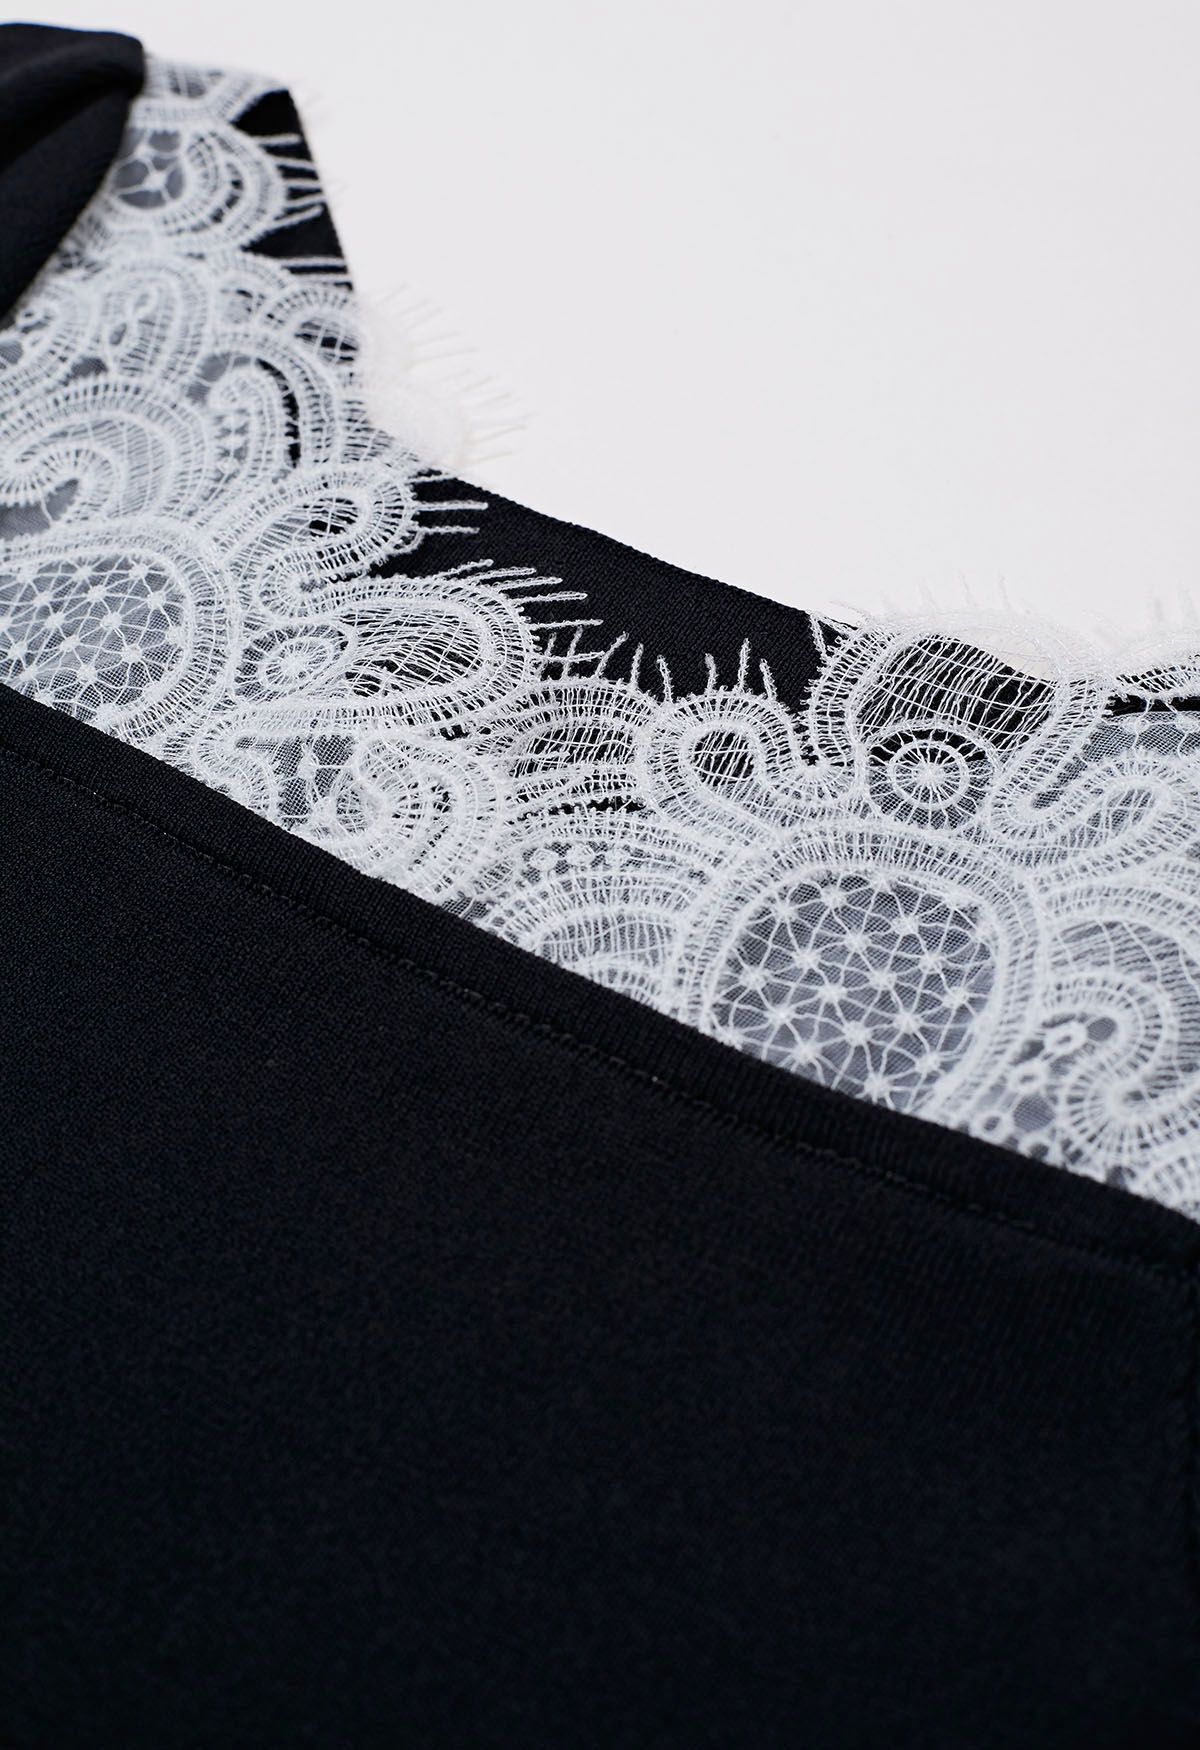 Lace Spliced Square Neckline Knit Top in Black